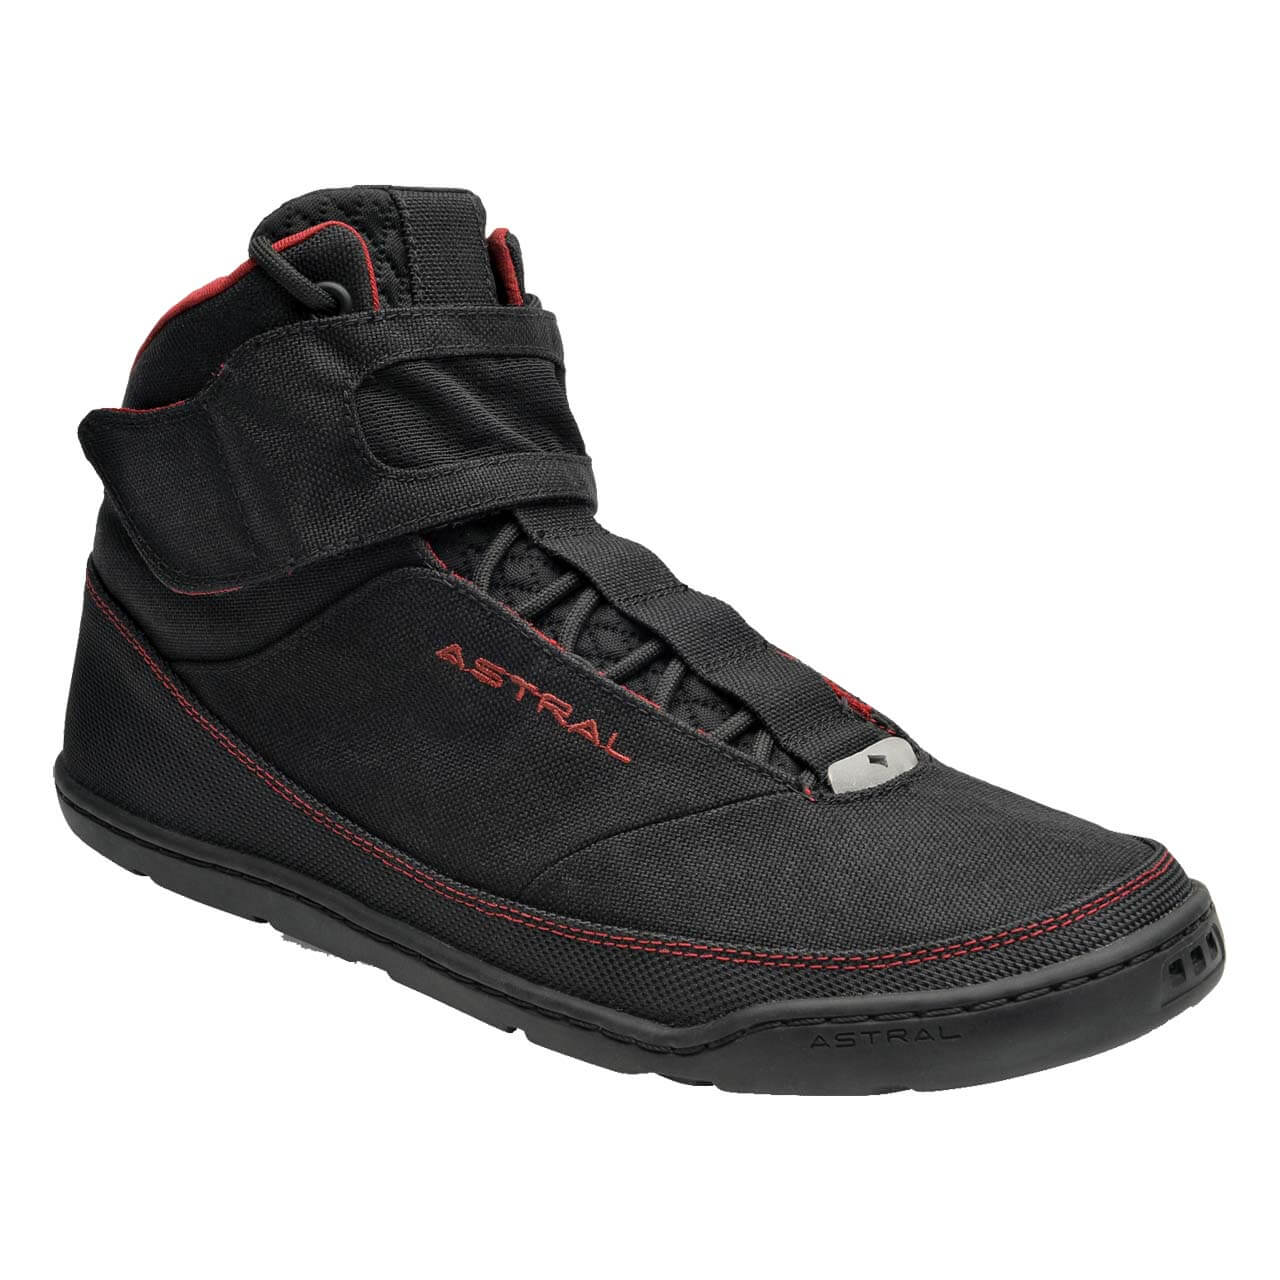 Astral Hiyak Kajak Boots - Black, US 9 / EU 42.6